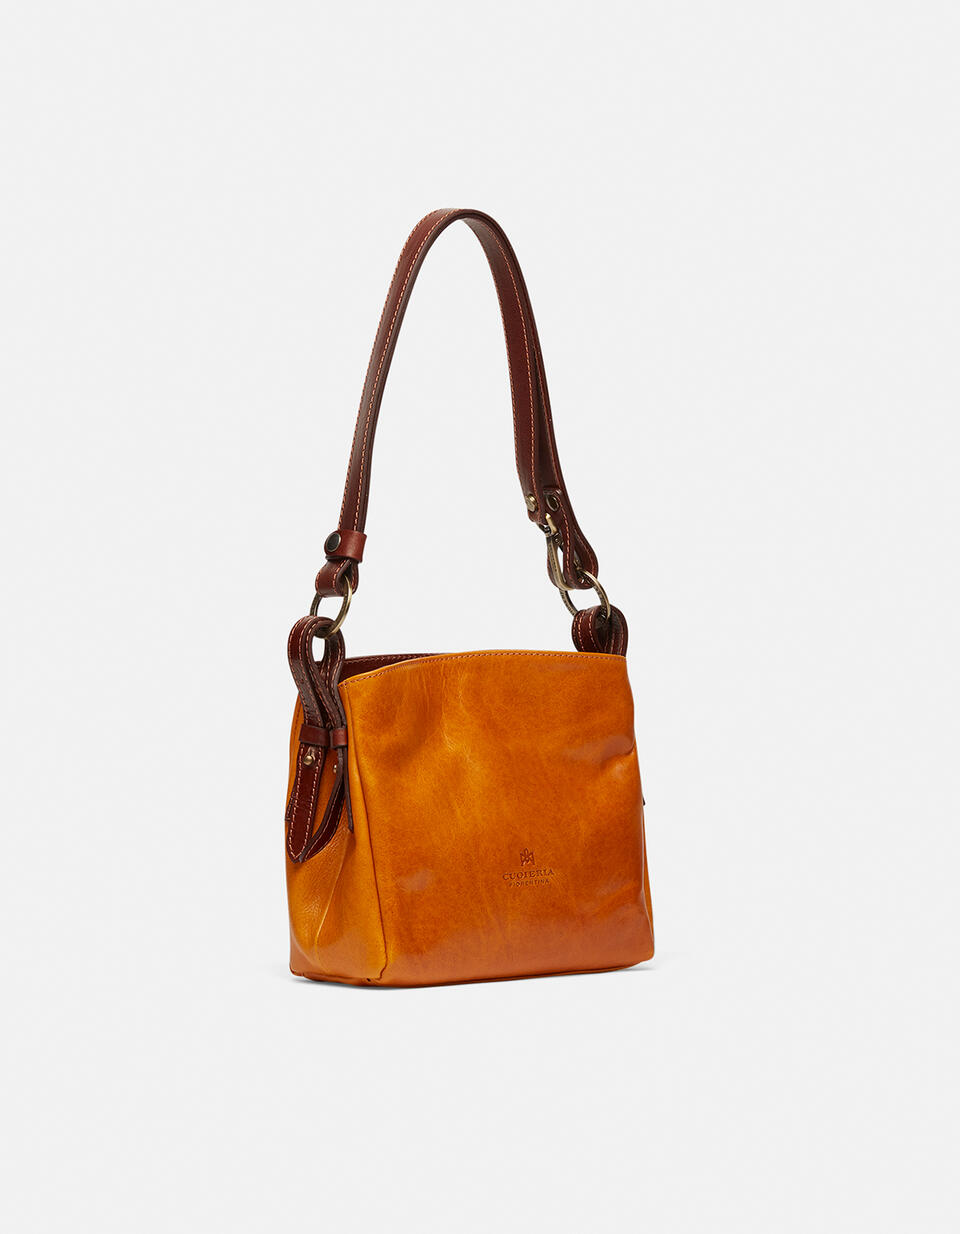 Tokyo leather shoulder bag - Shoulder Bags - WOMEN'S BAGS | bags GIALLOBICOLORE - Shoulder Bags - WOMEN'S BAGS | bagsCuoieria Fiorentina